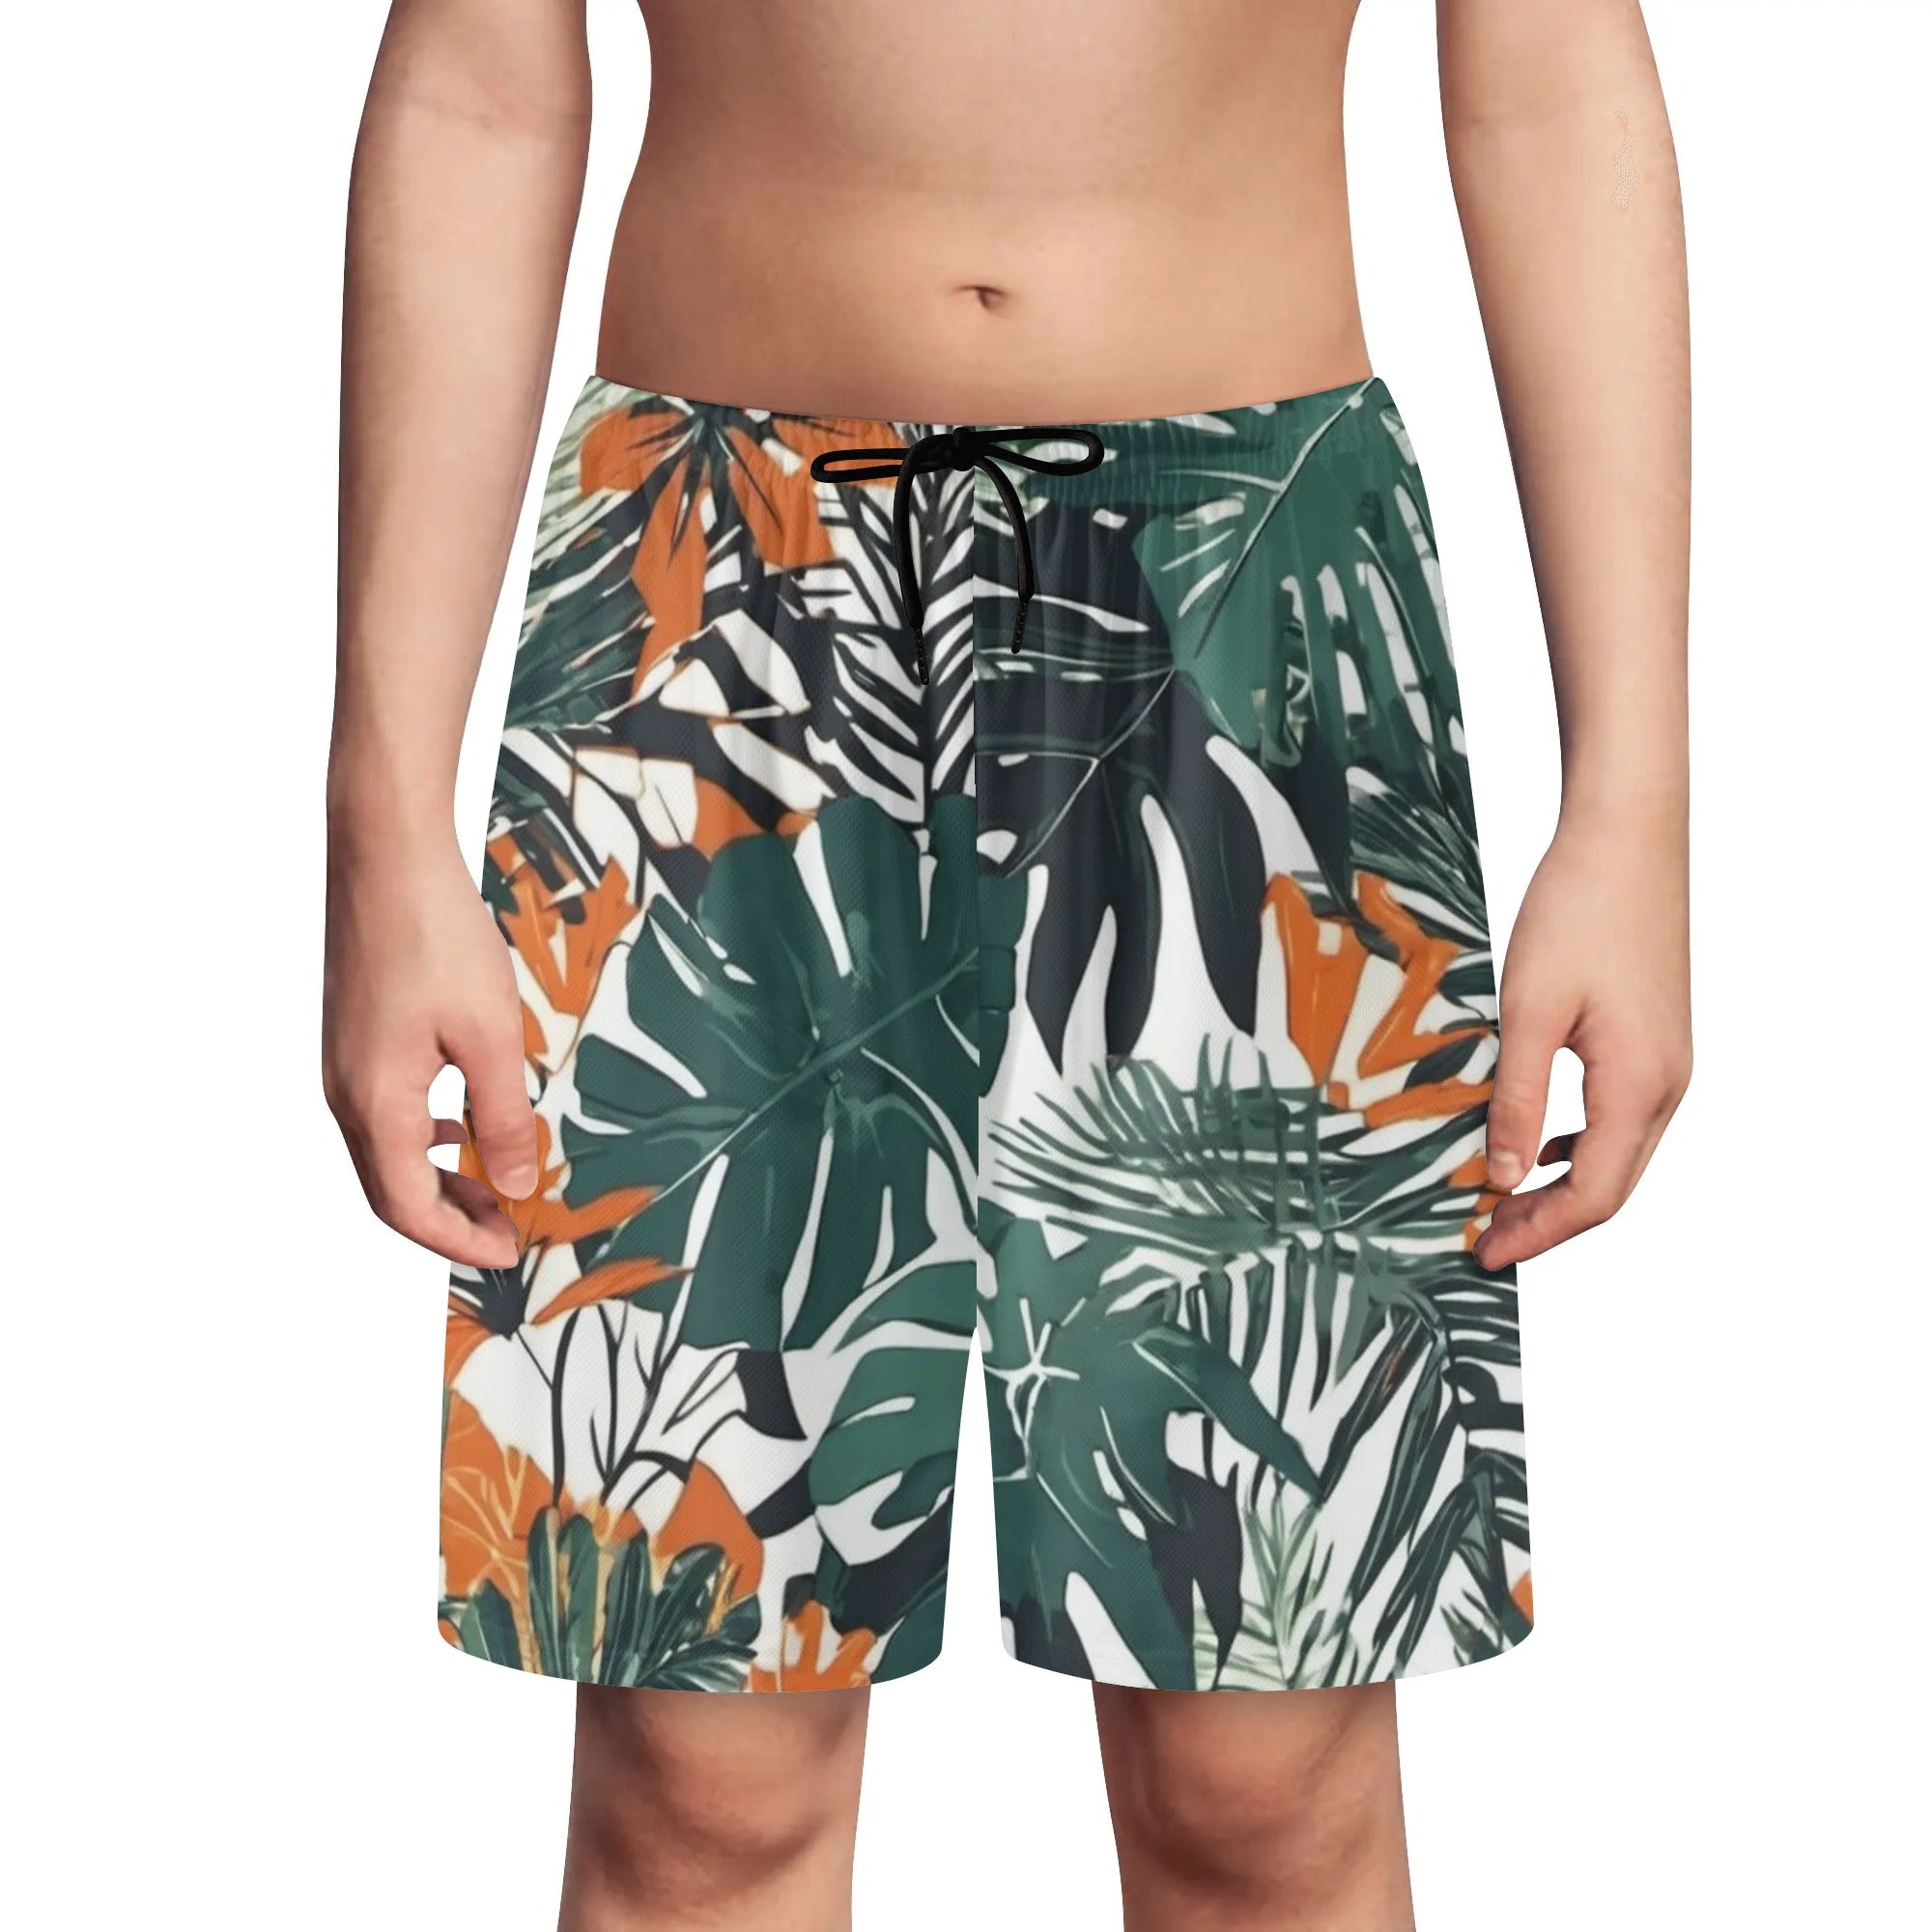 Black String 2 - Jungle Voyage Boys Lightweight Beach Shorts - boys beach shorts at TFC&H Co.